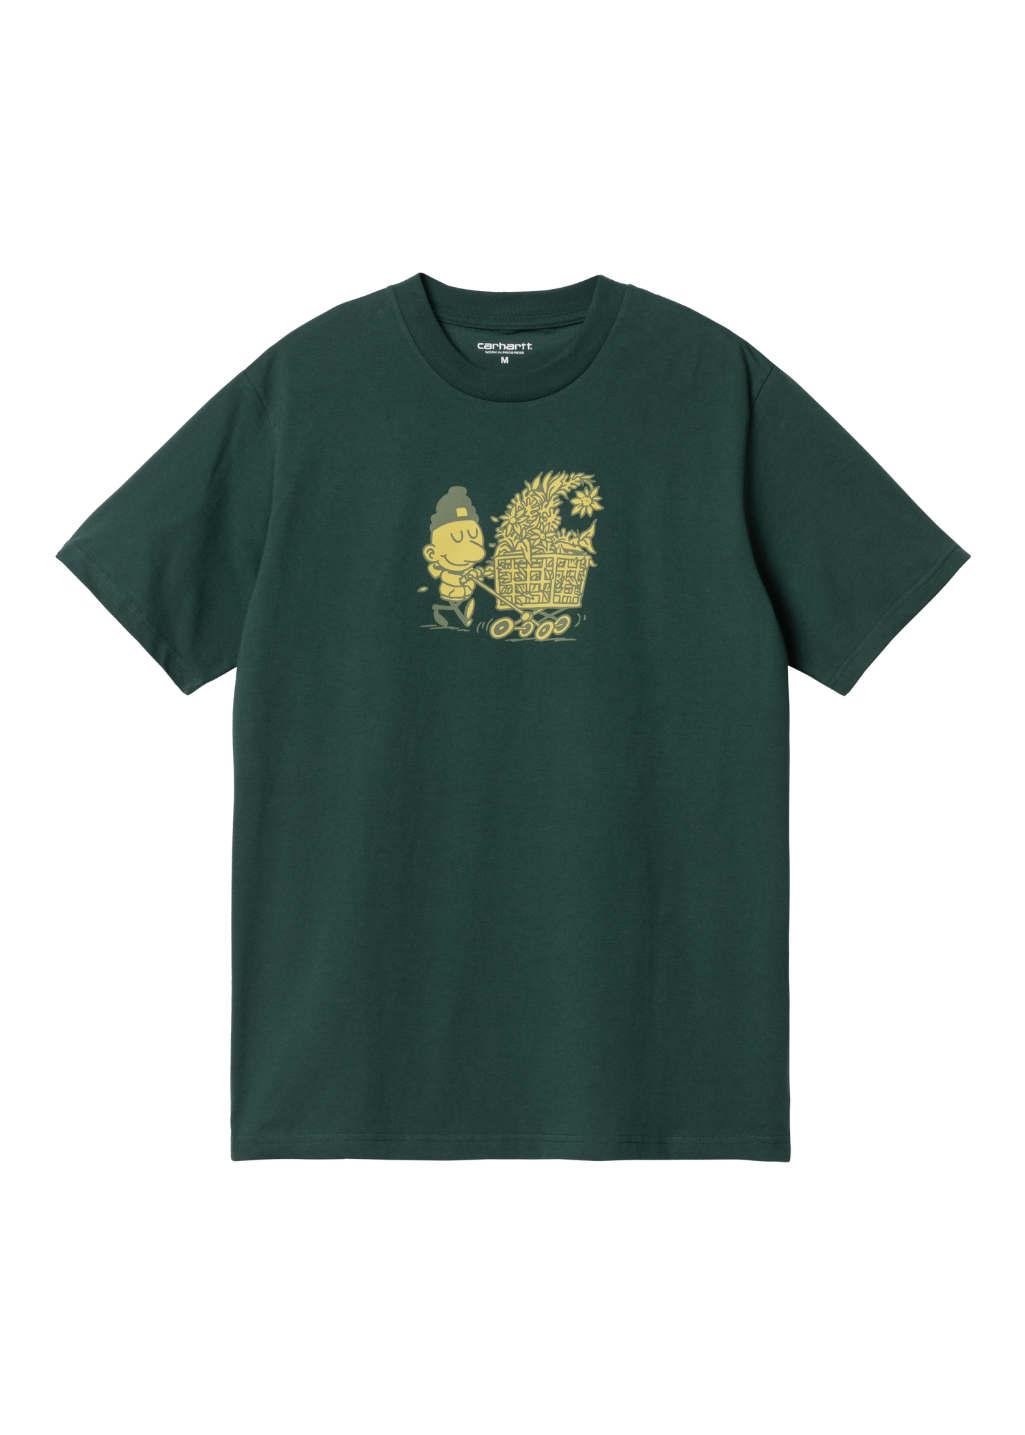 Carhartt WIP - S/S Shopper T-Shirt - Discovery Green - Hardpressed Print Studio Inc.